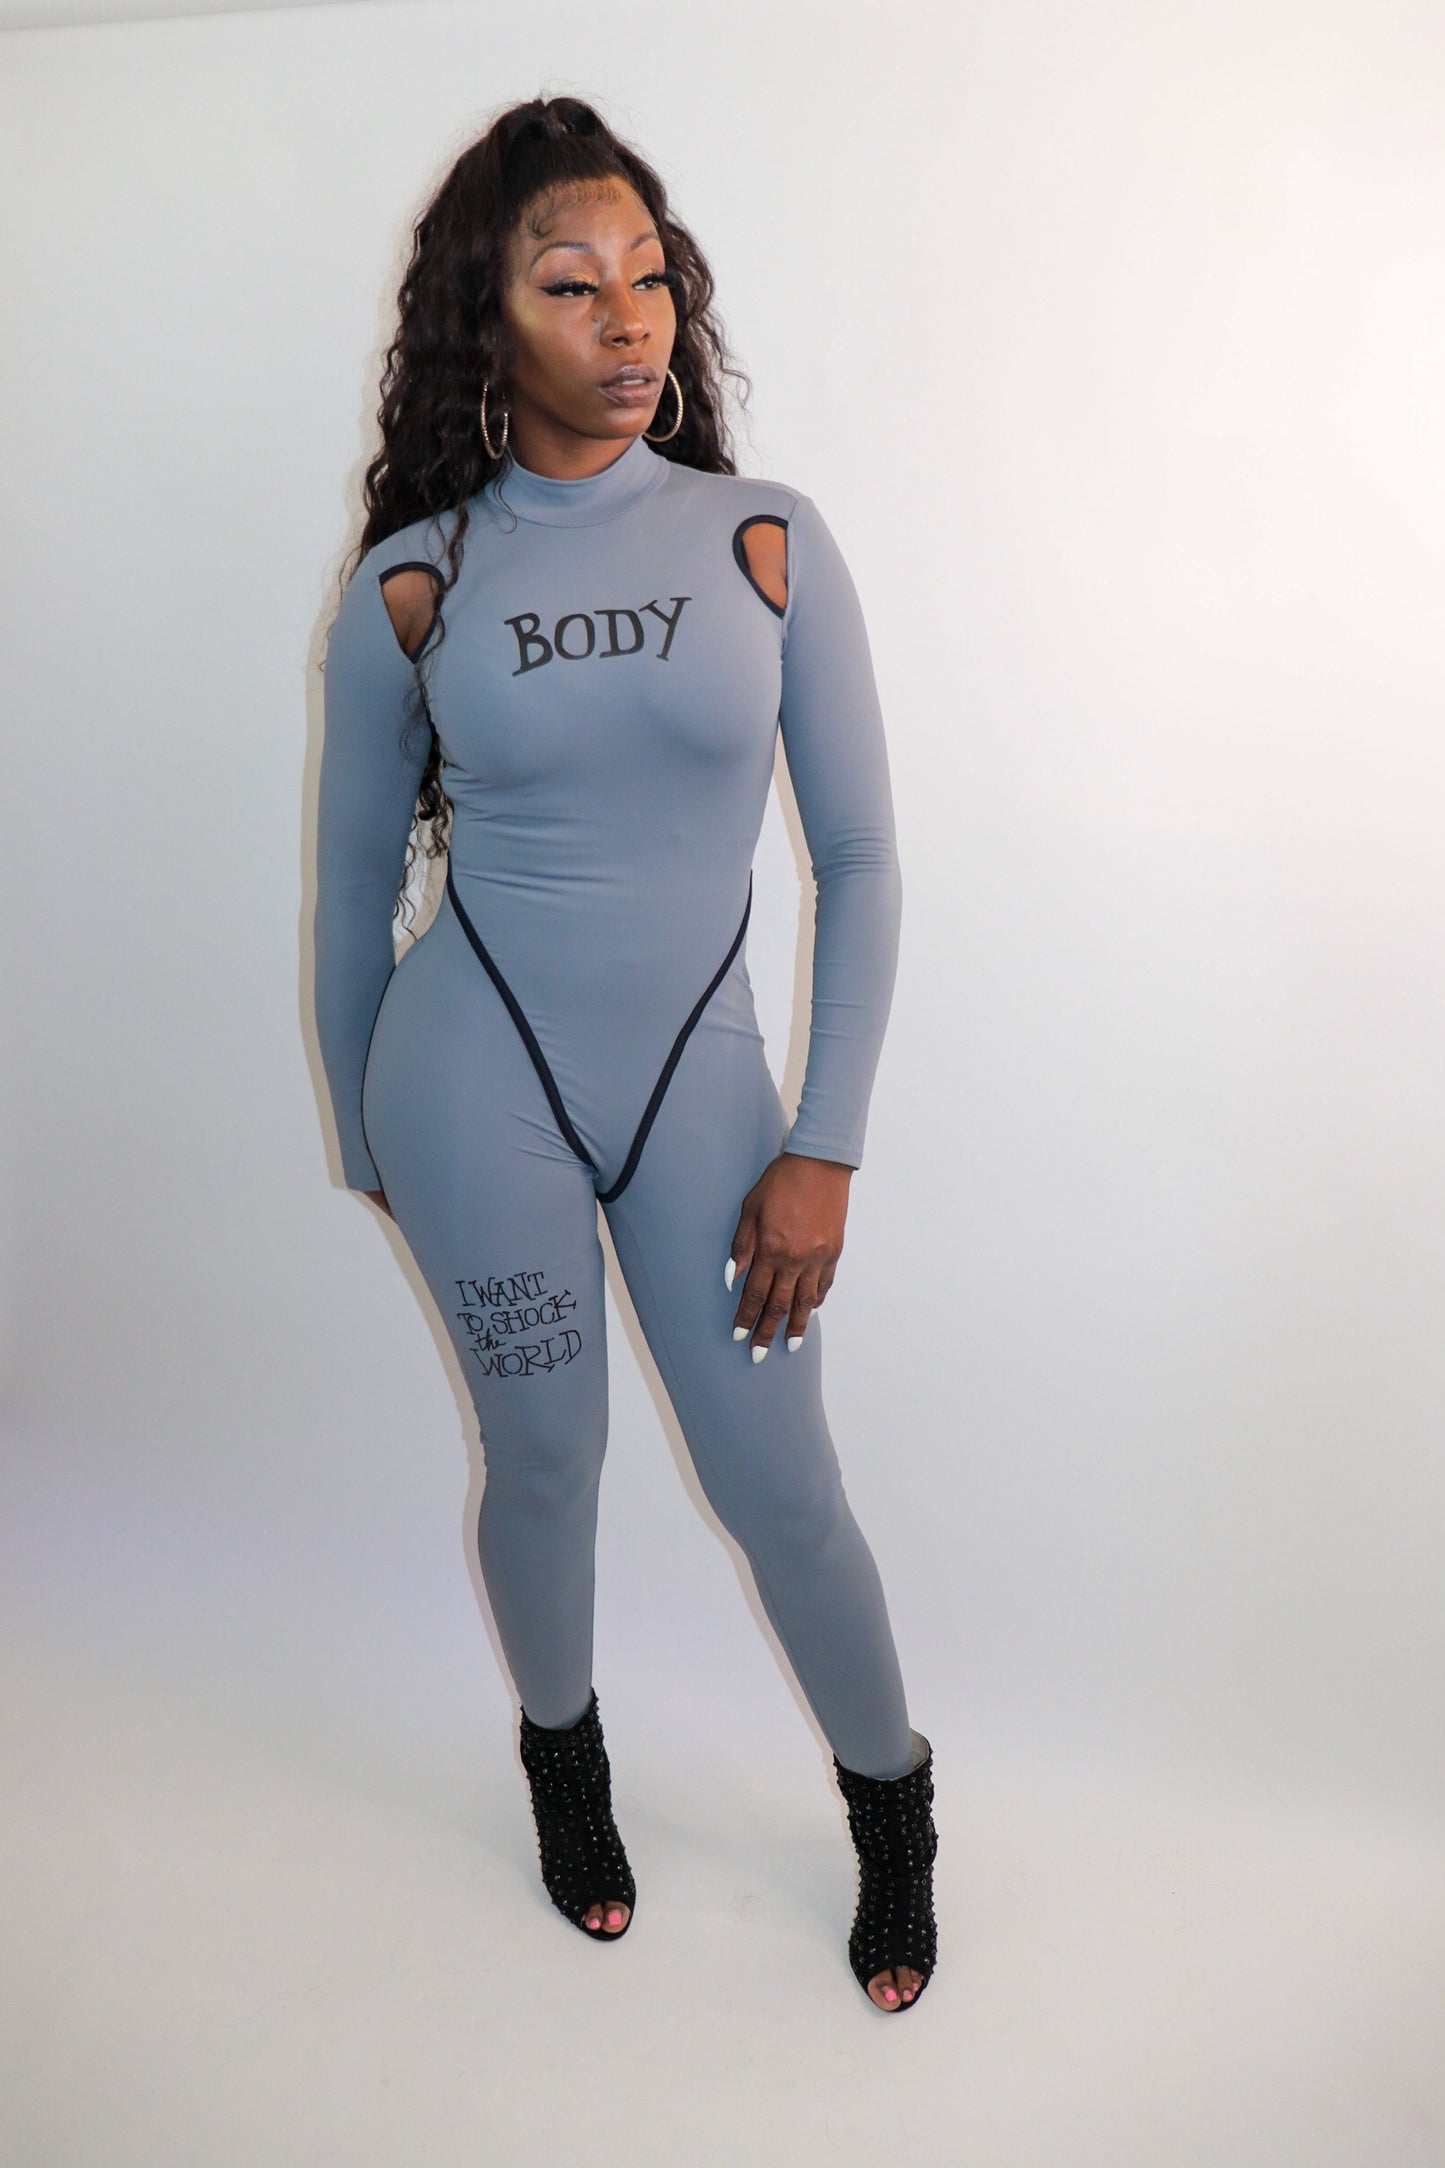 Body Ody Jumpsuit (Gray)